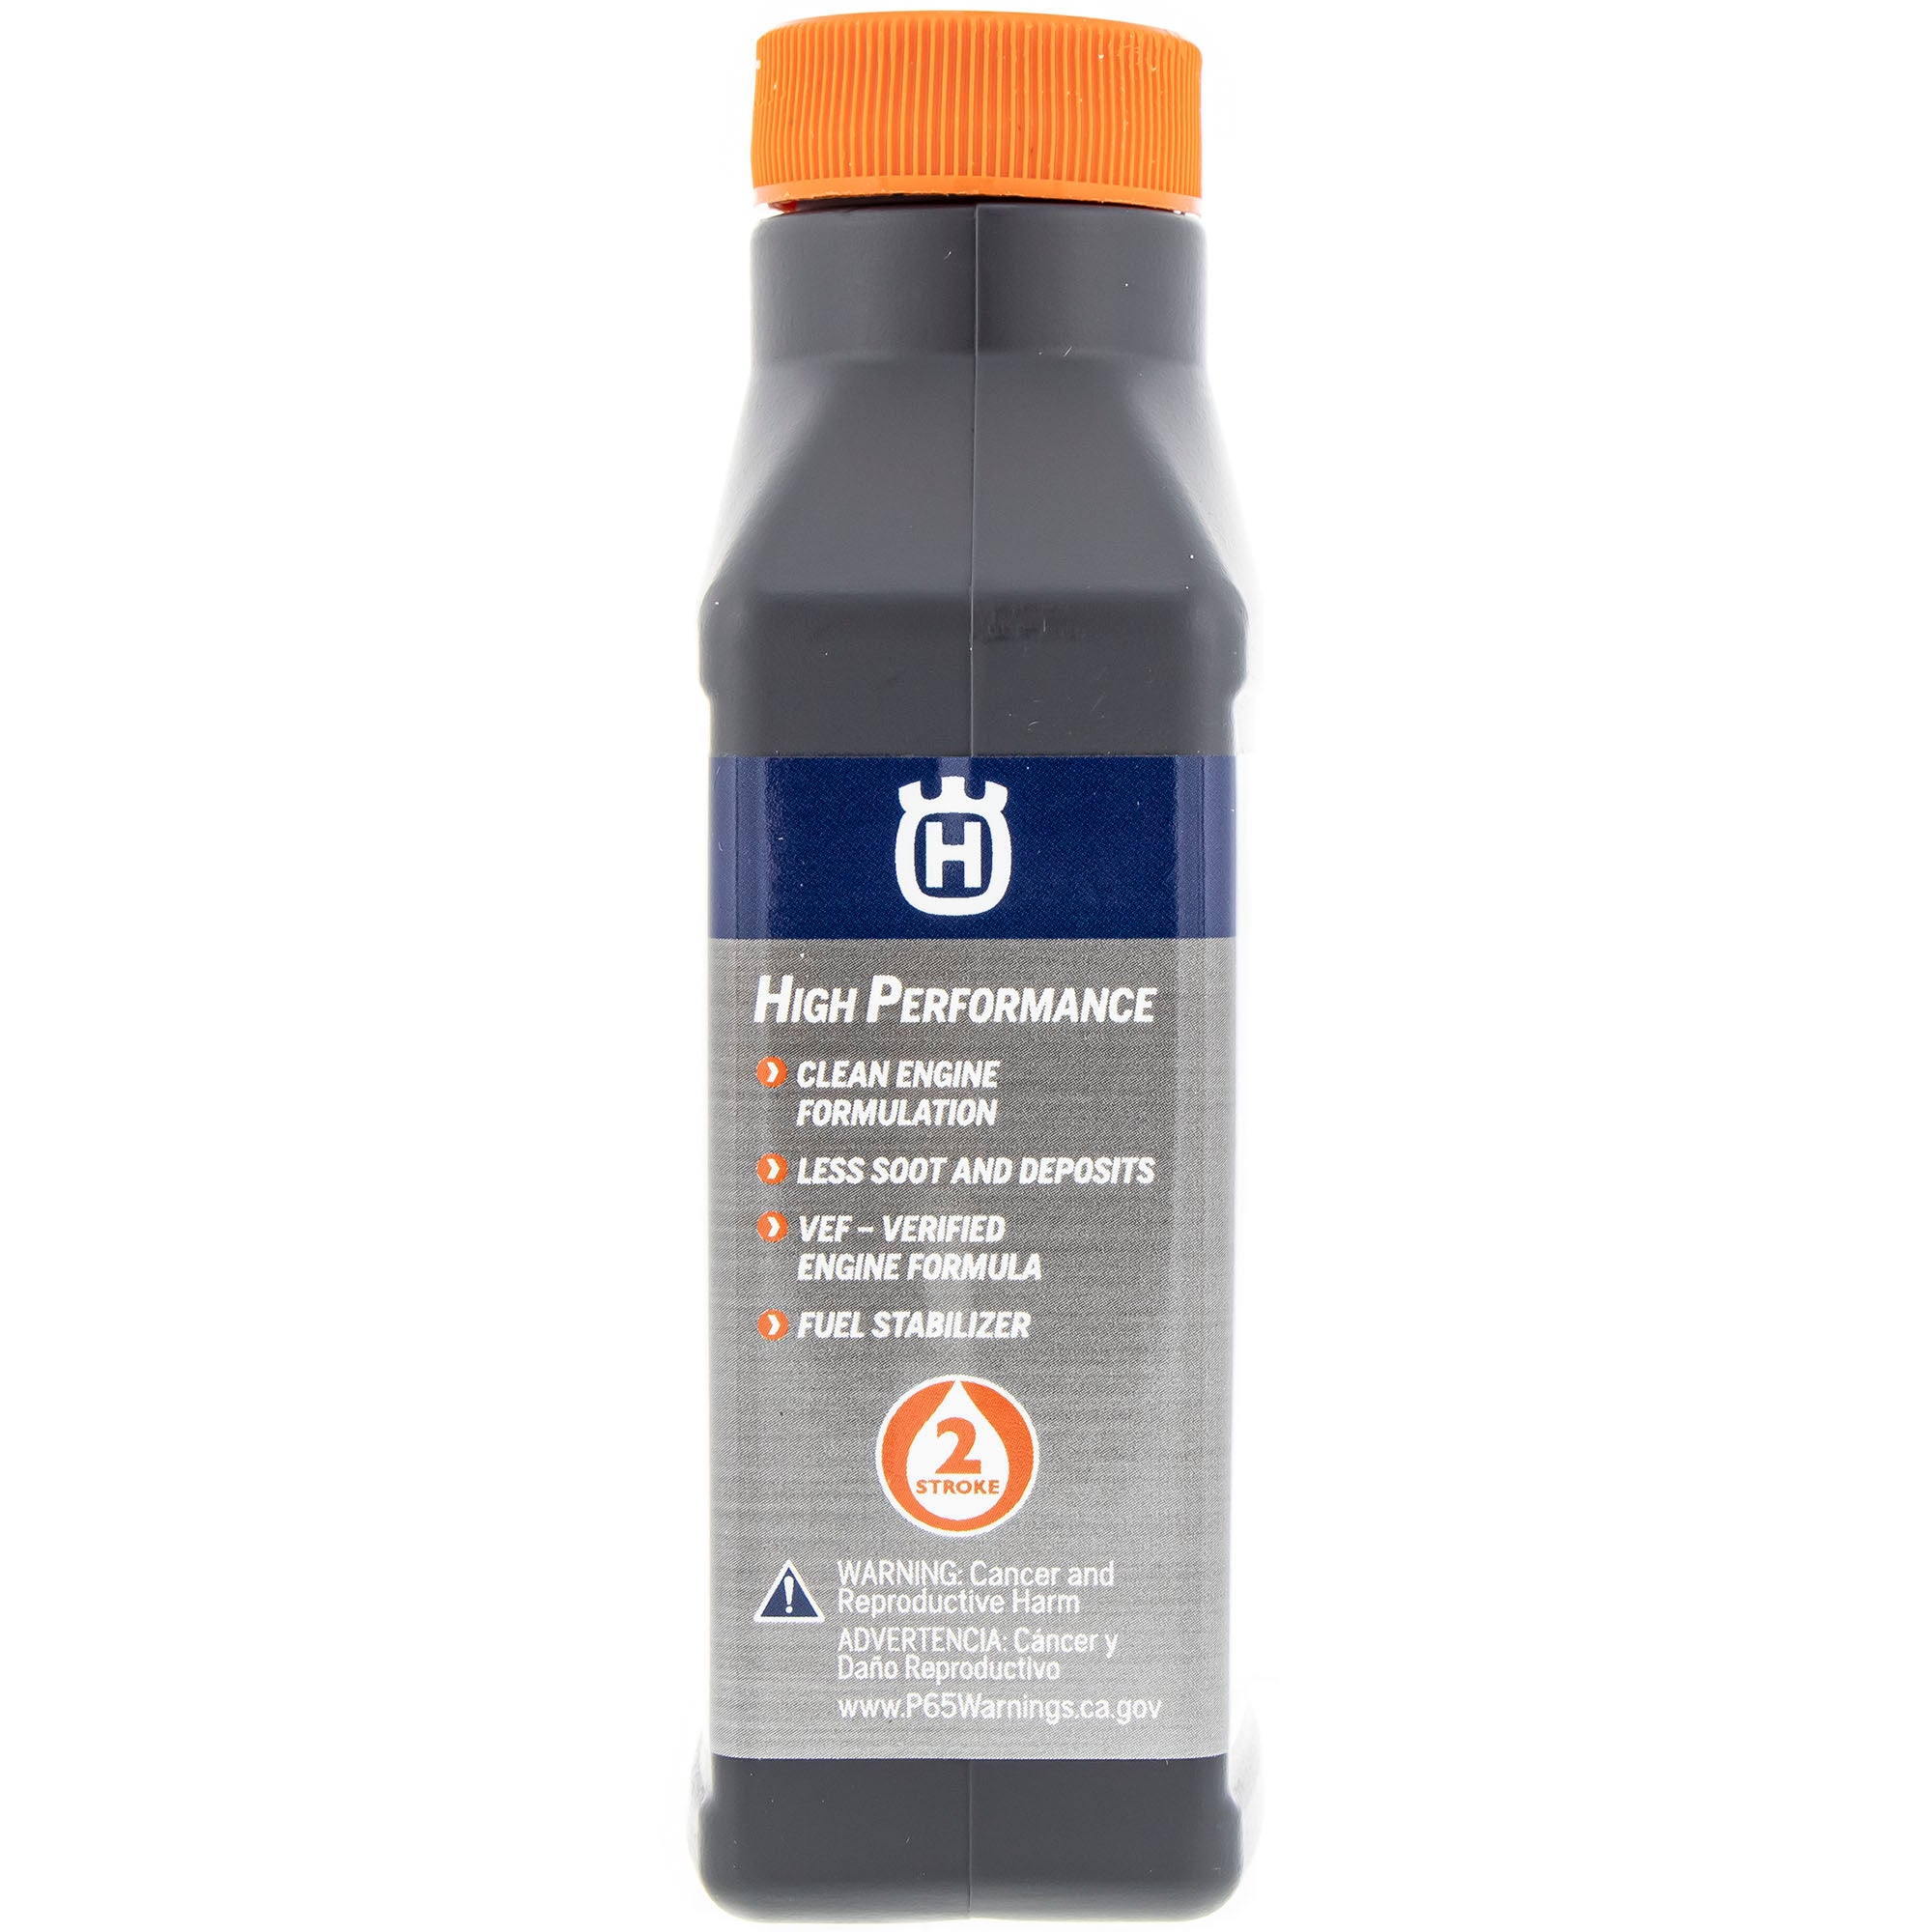 Husqvarna 2HP HP 2-Stroke Engine Oil 5.2oz Bottle High Performance Synthetic Blend 50:1